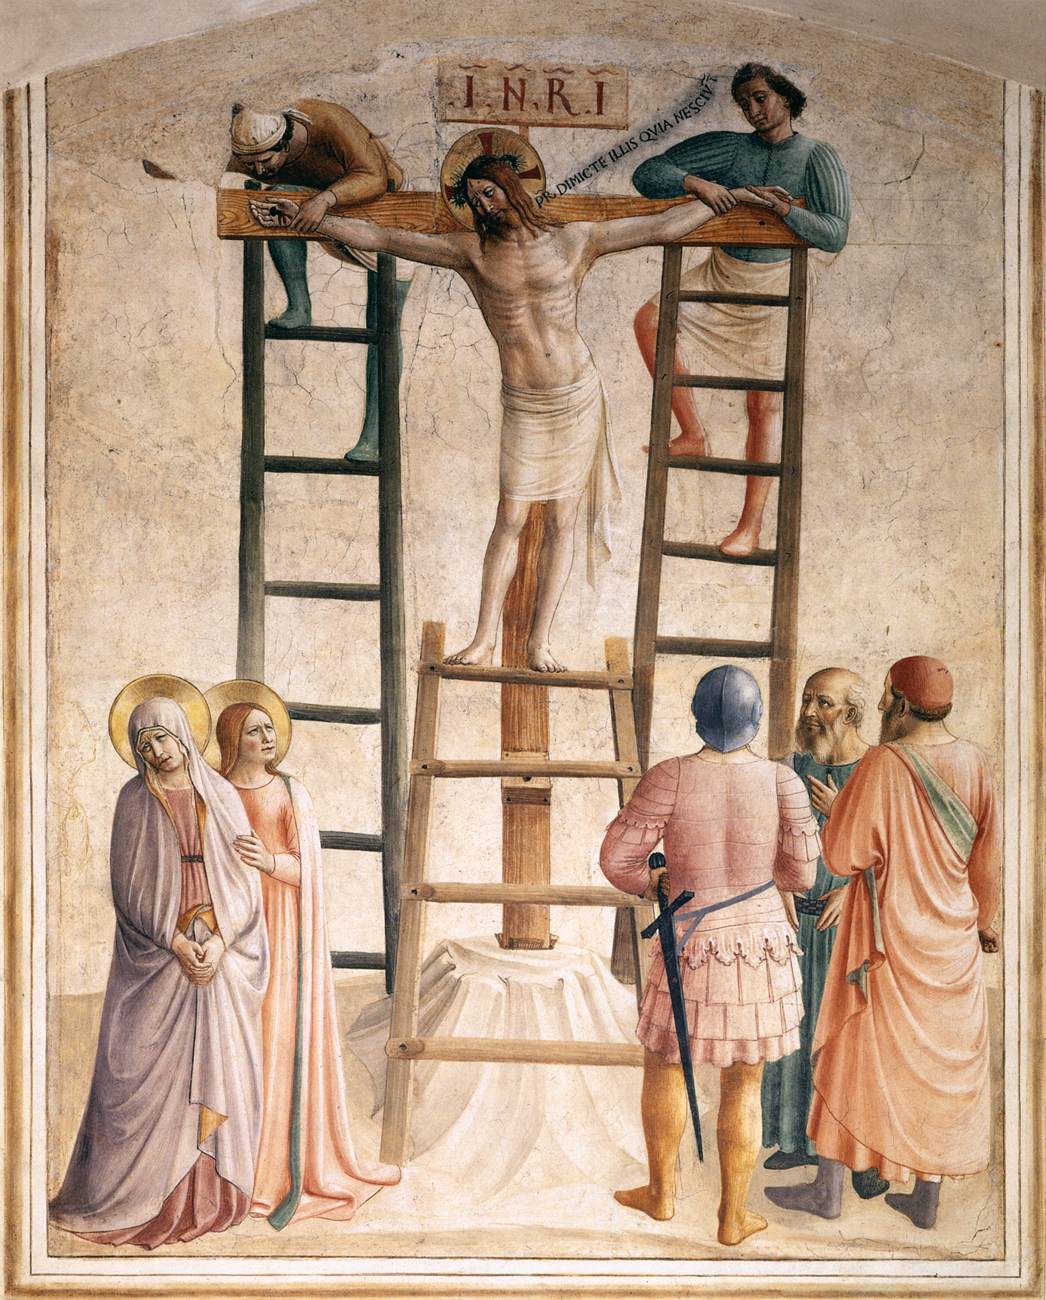 Spikret fra Kristus til korset (celle 36)